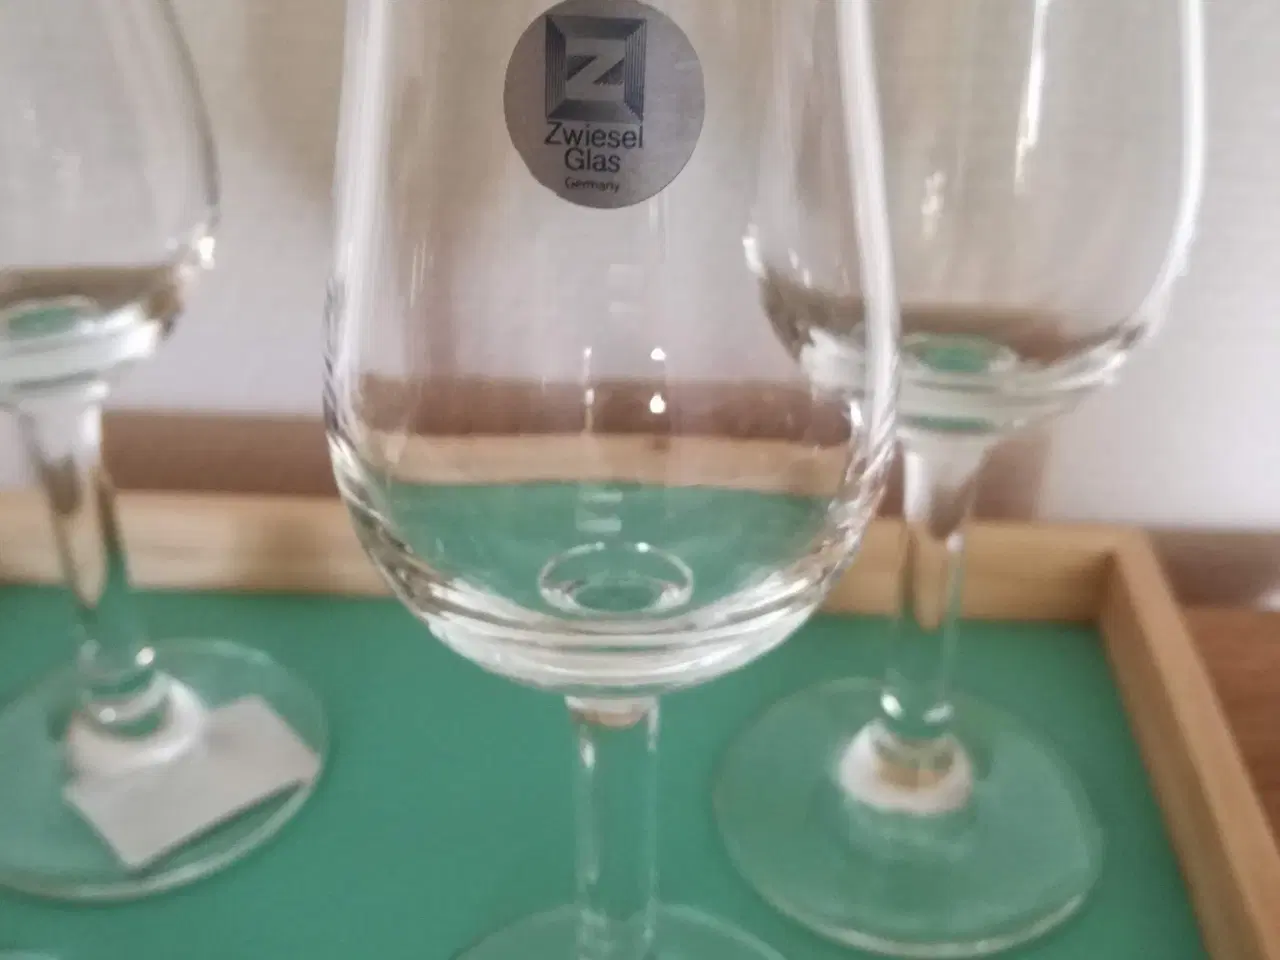 Billede 2 - Likør/cognac glas, Zwiesel